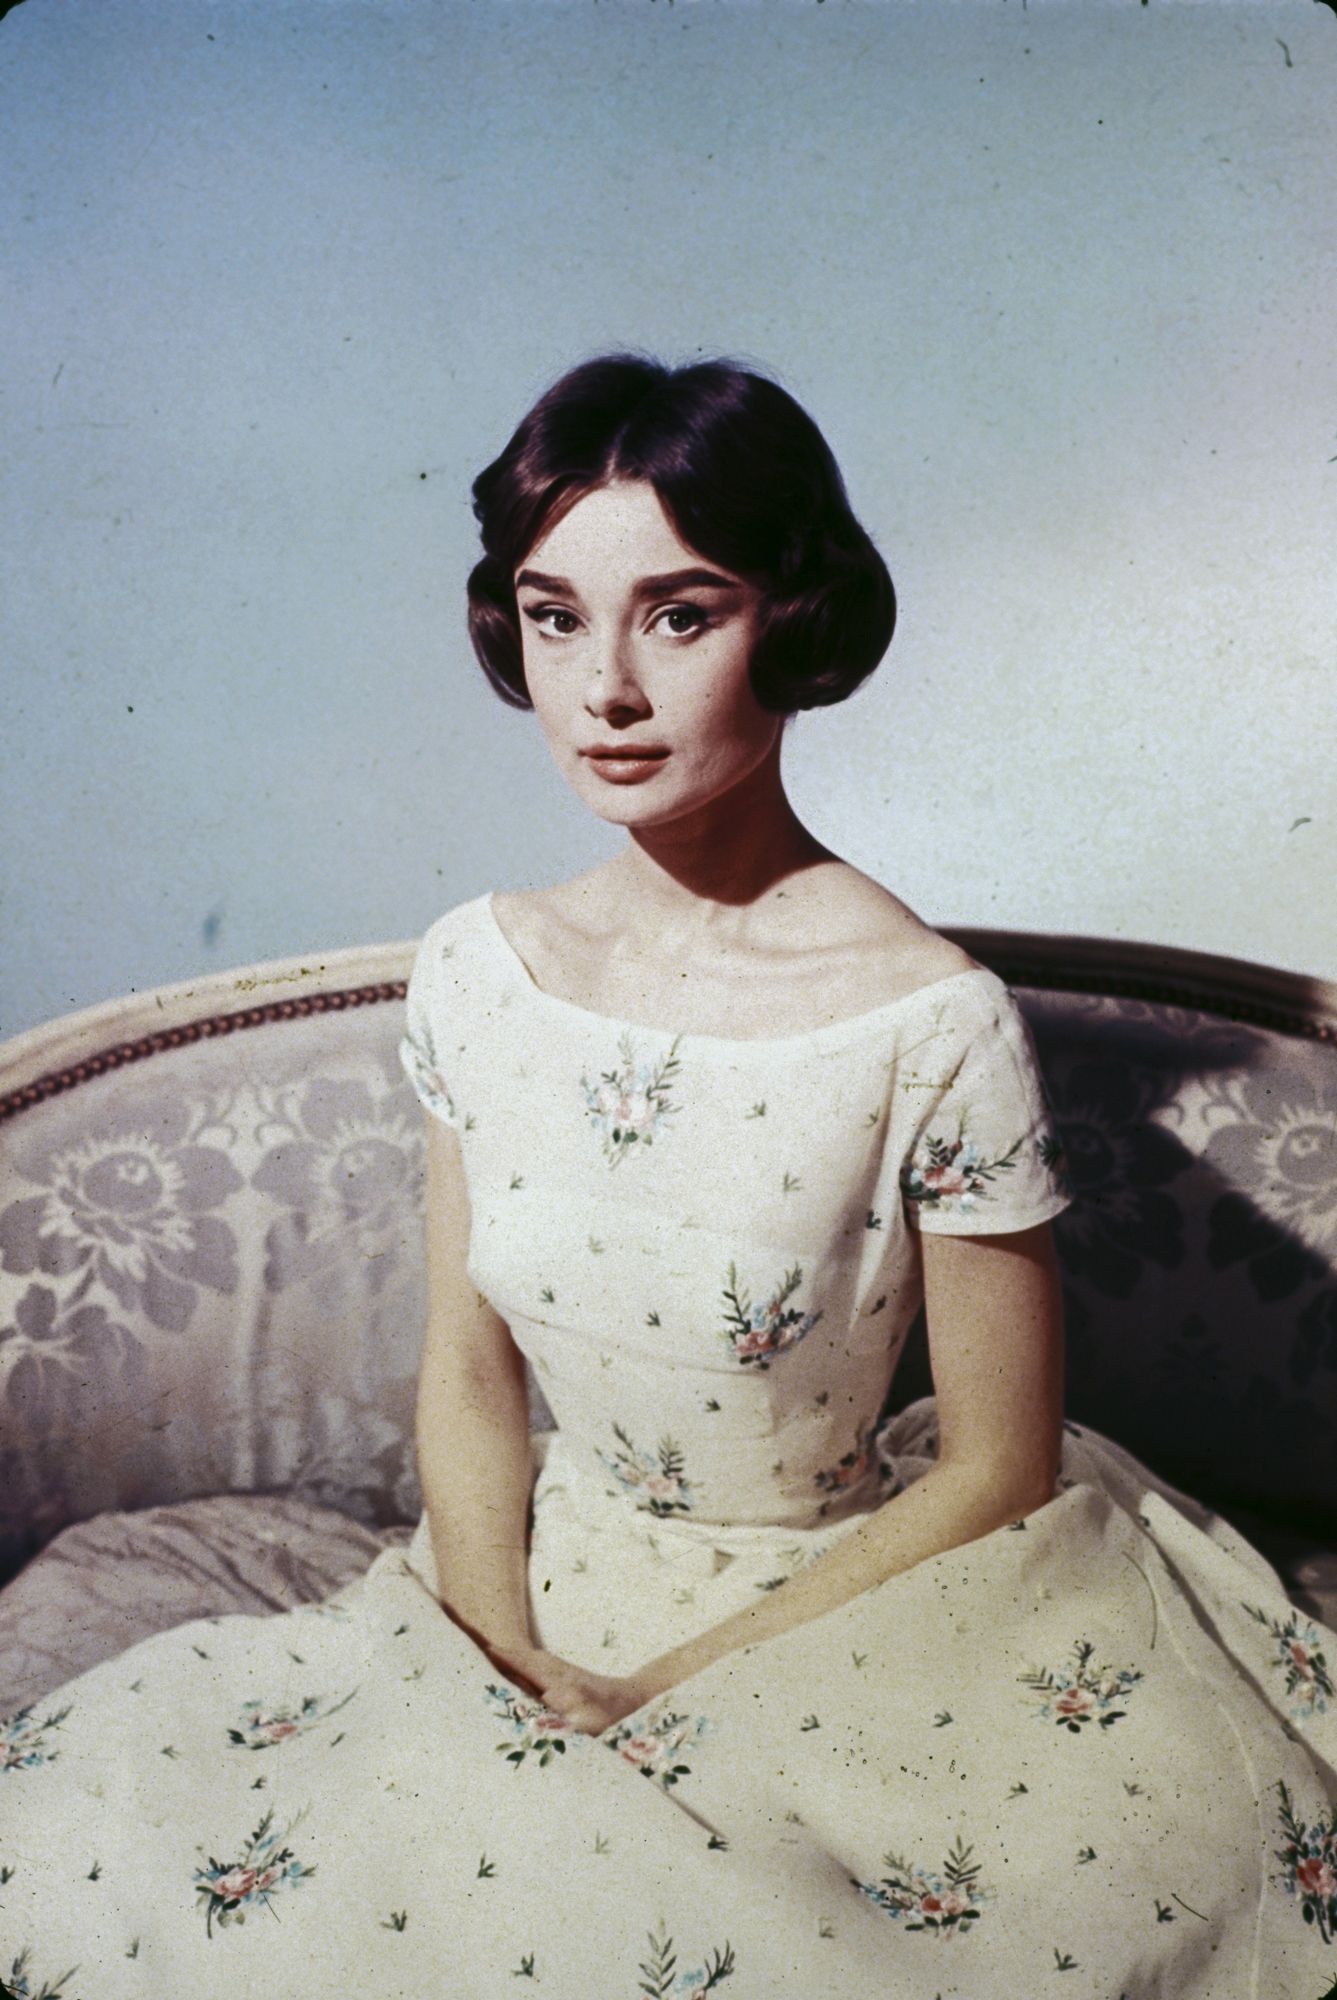 Audrey Hepburn Style: See Her Best Looks